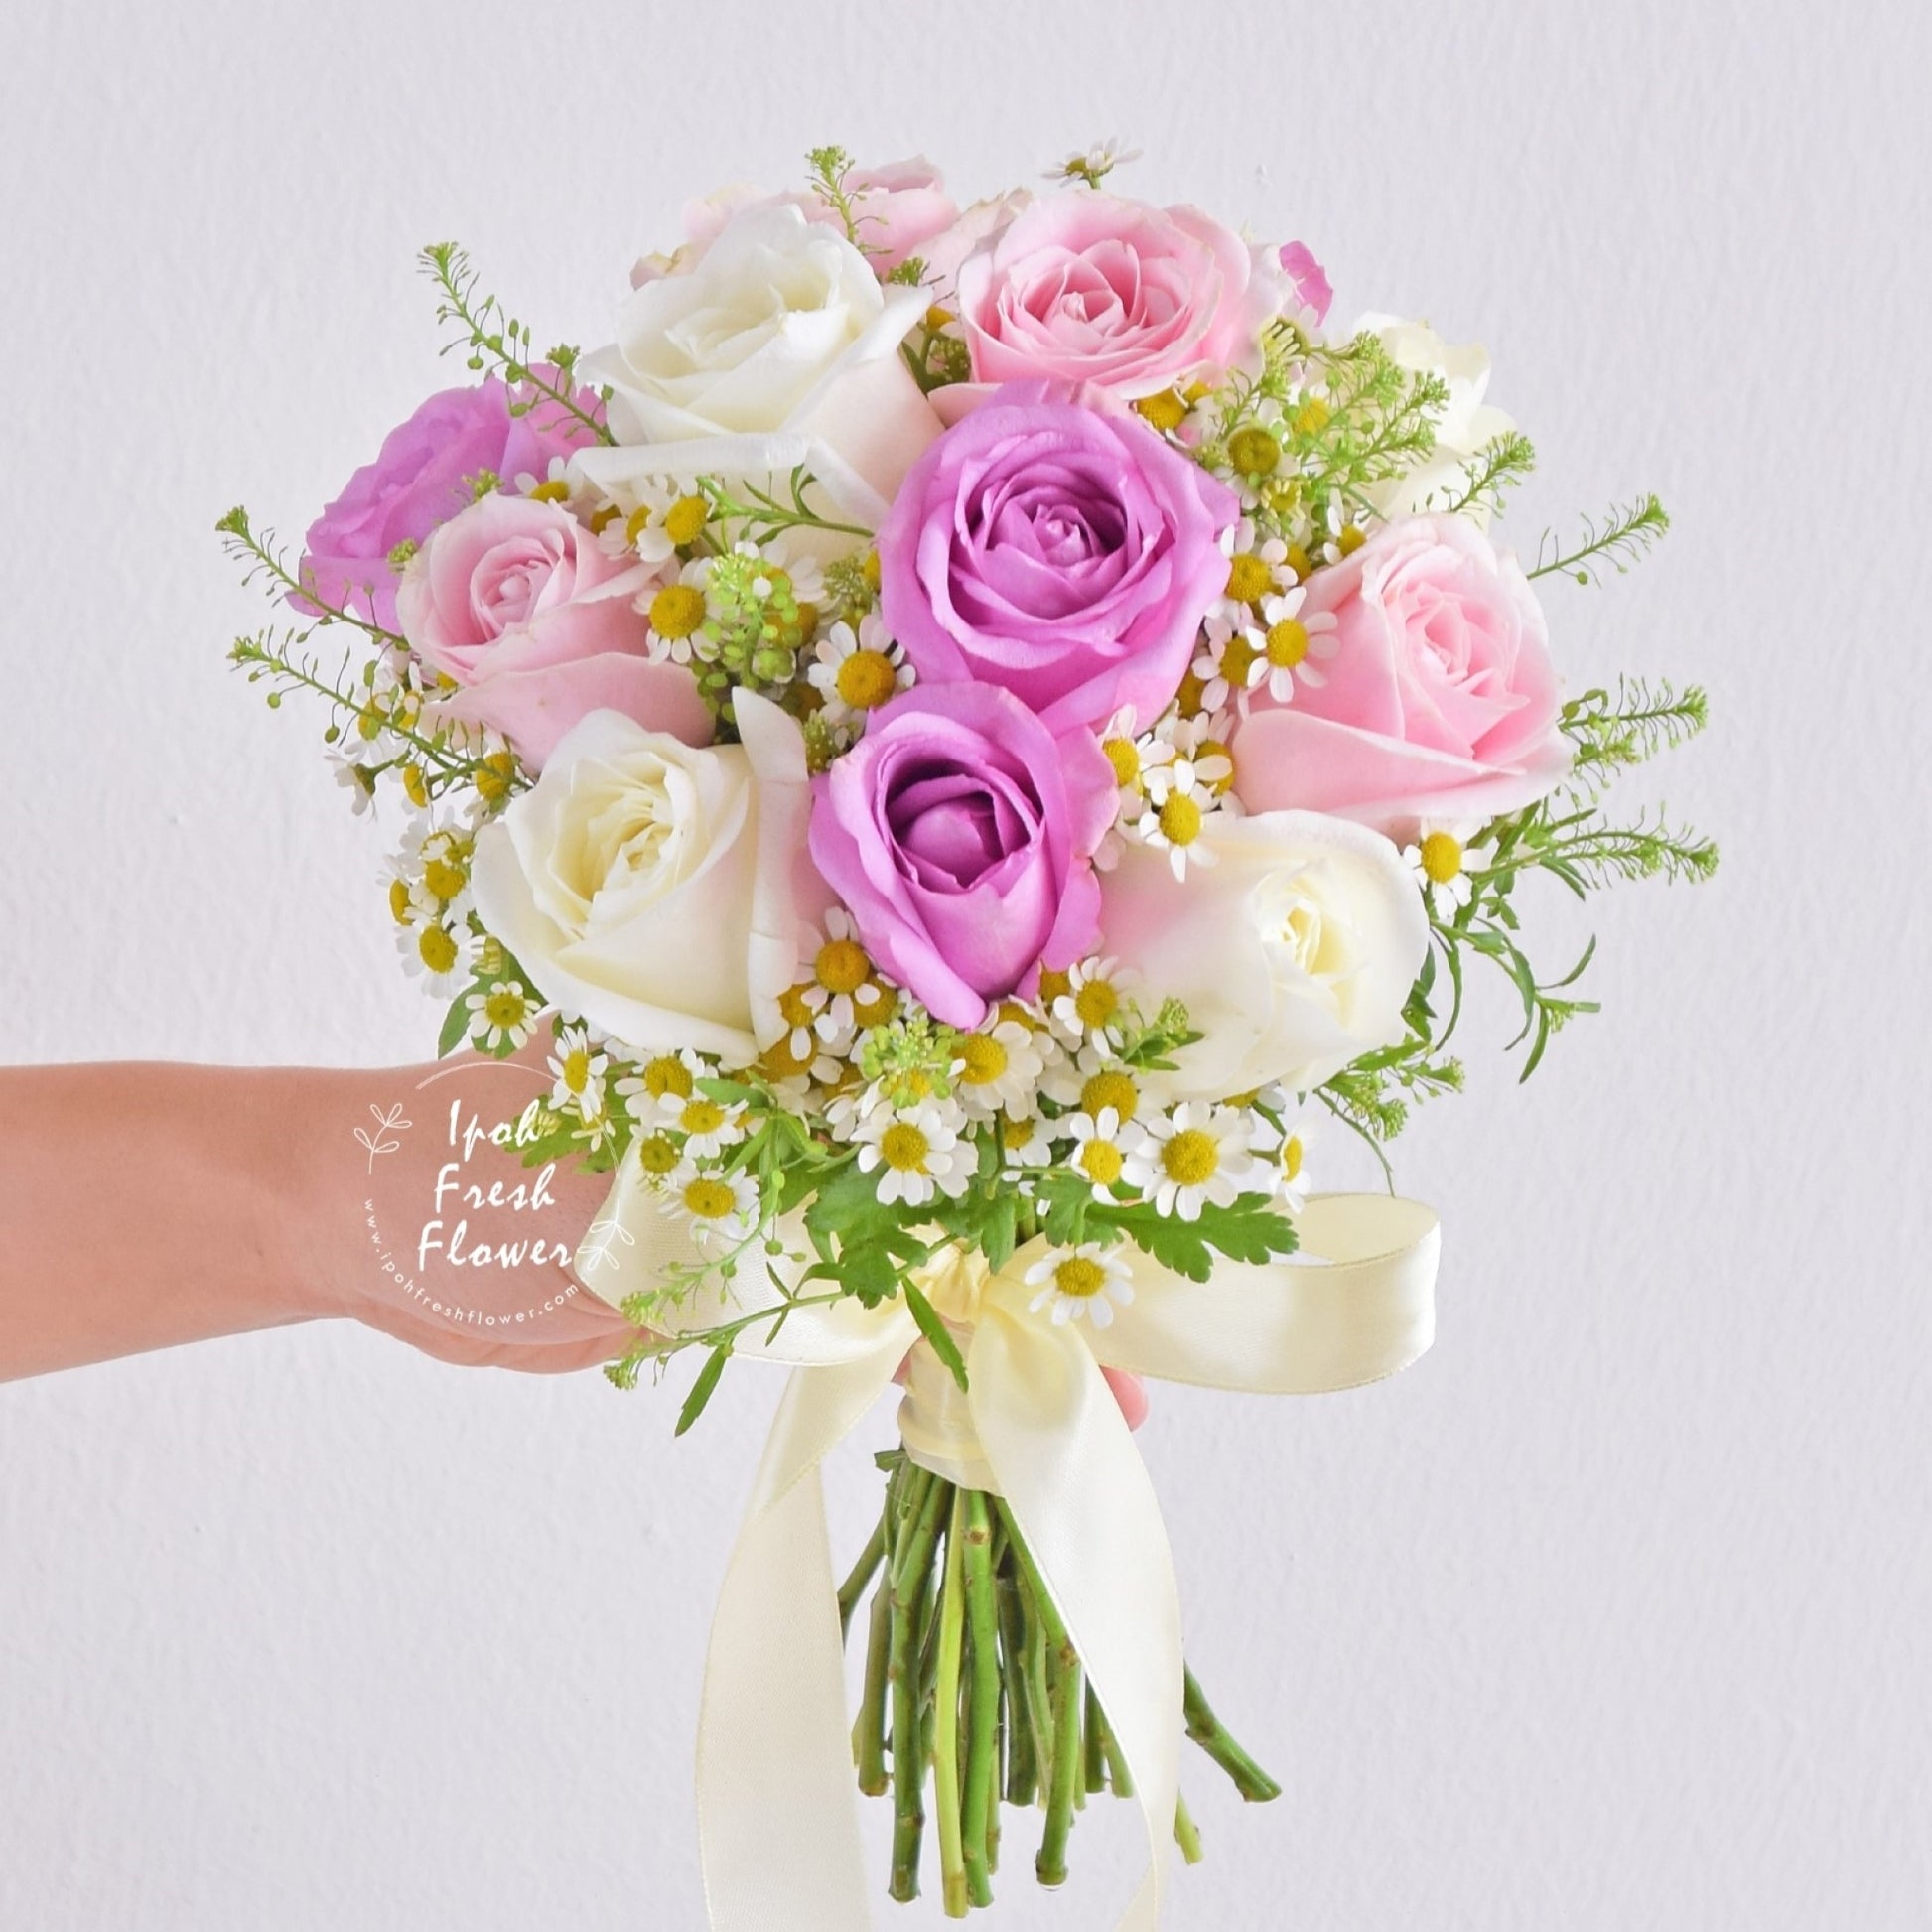 Nobel Bridal Bouquet| Personalized wedding & ROM flowers